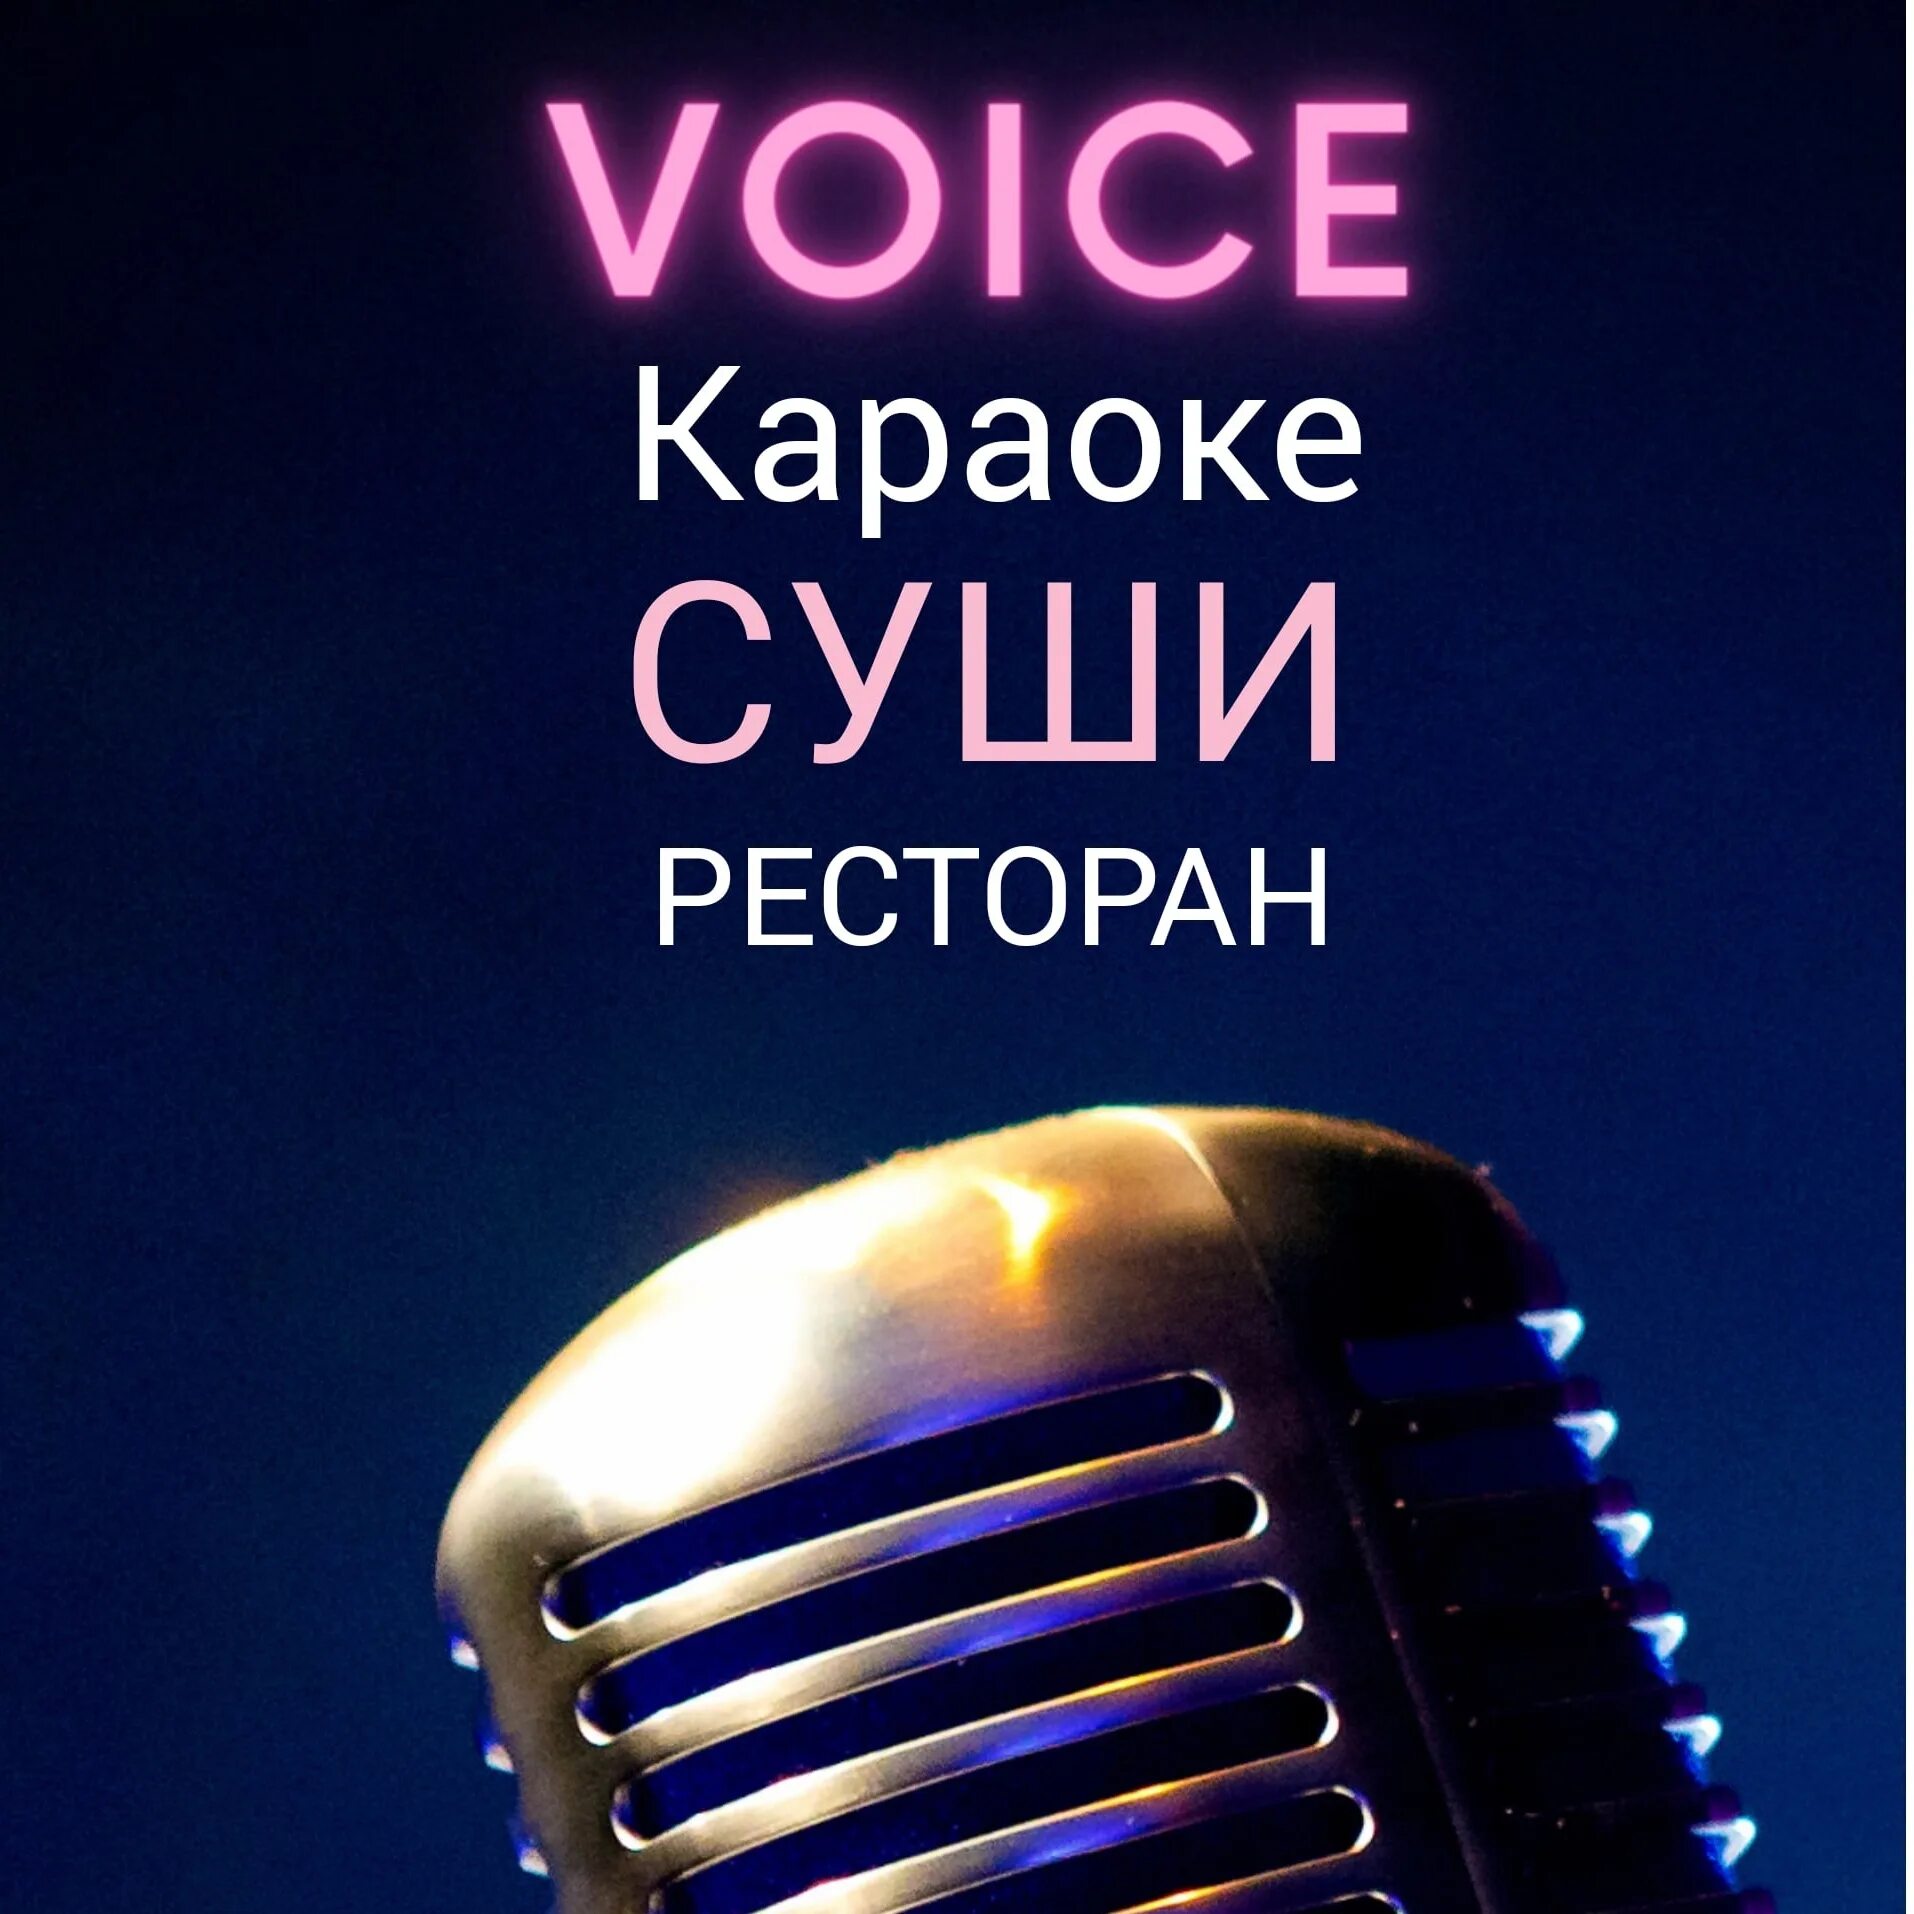 Караоке Voice. Карааге ролл. Кафе караоке Voice Анапа. Войс караоке Ставрополь. Voice караоке